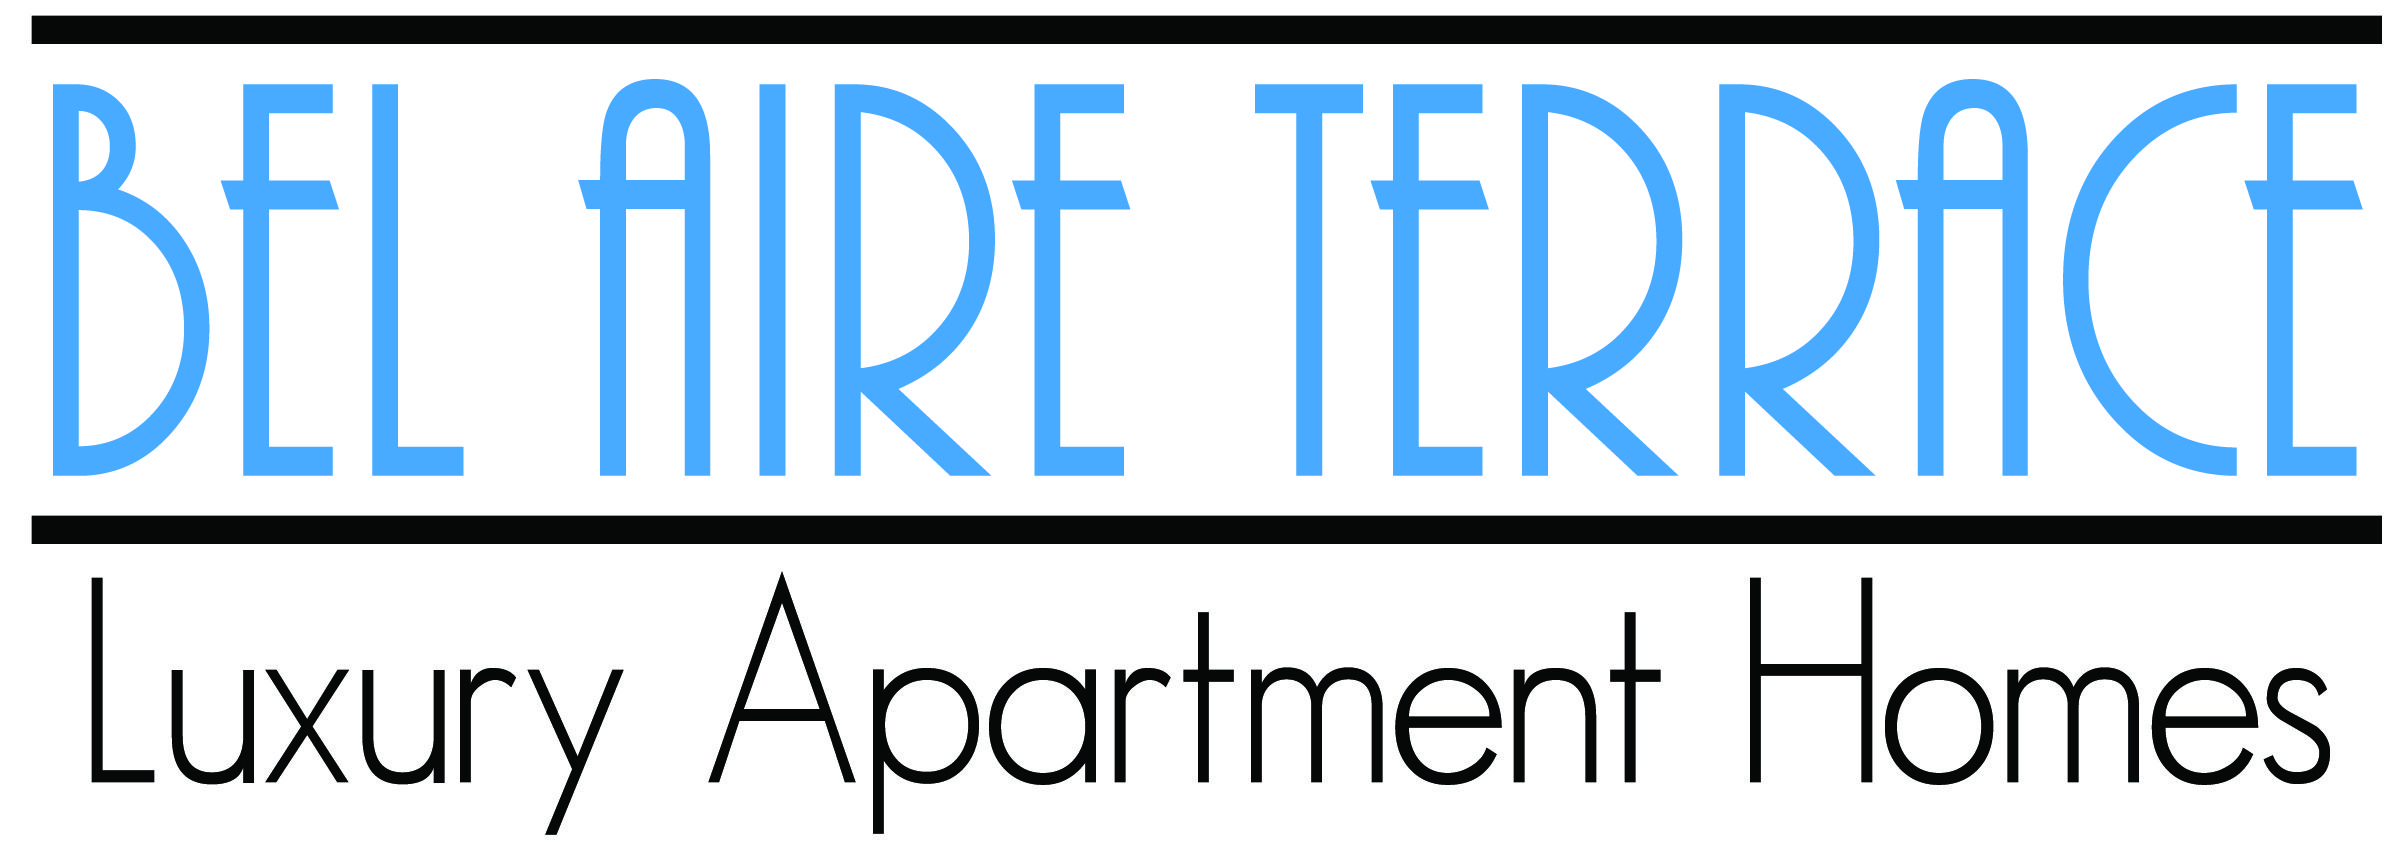 Bel Aire Terrace Luxury Apartment Homes Logo